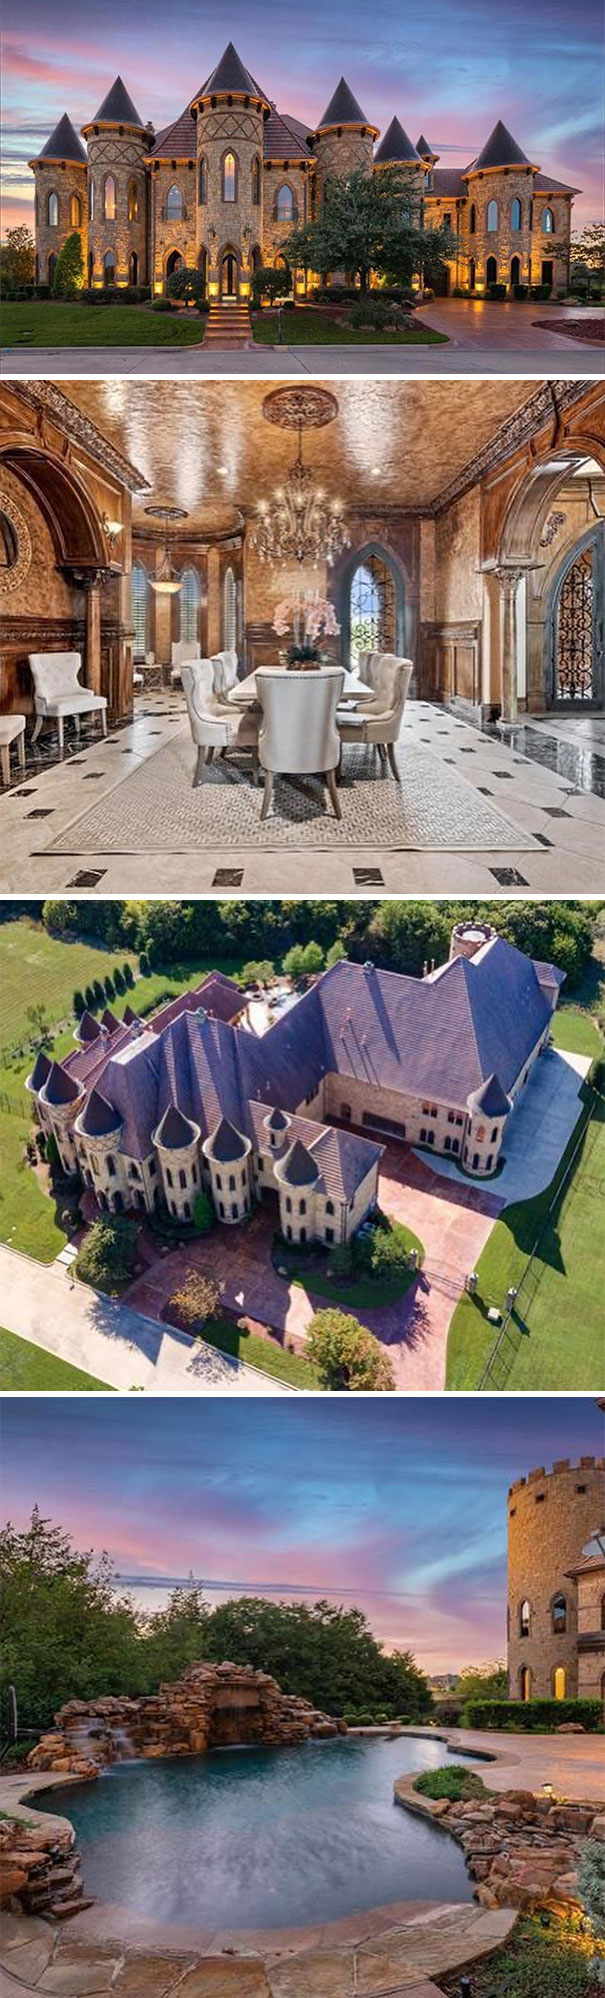 Happy Castle Mansion Sunday. $5,000,000